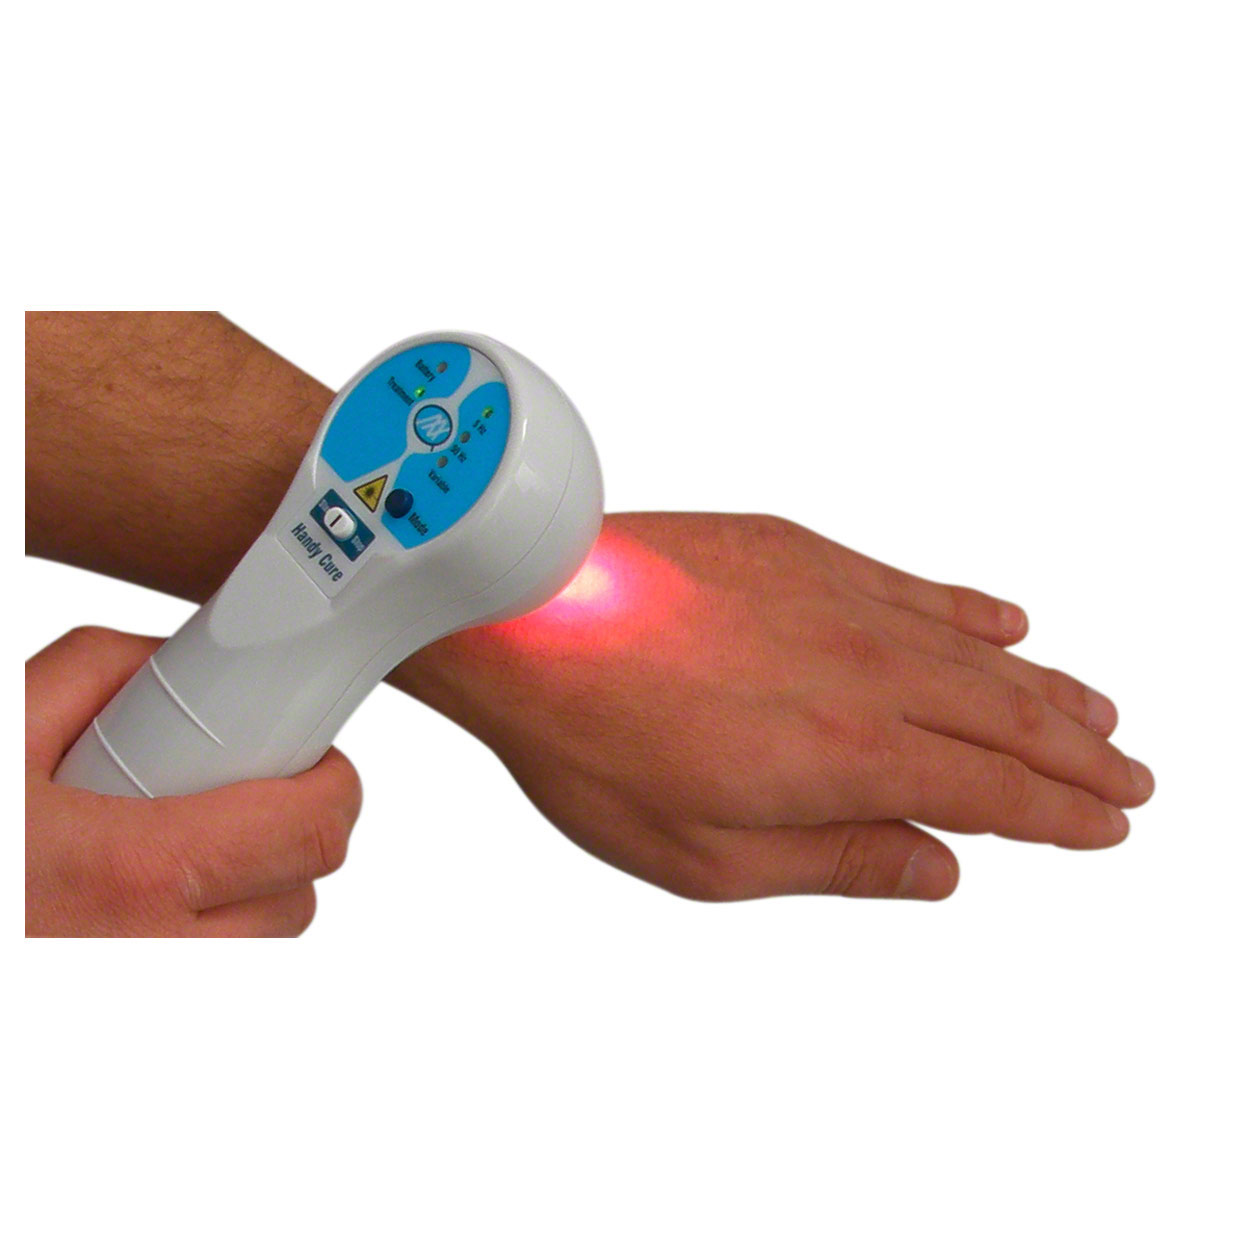 Laser combination device Cure S' online | Sport-Tec